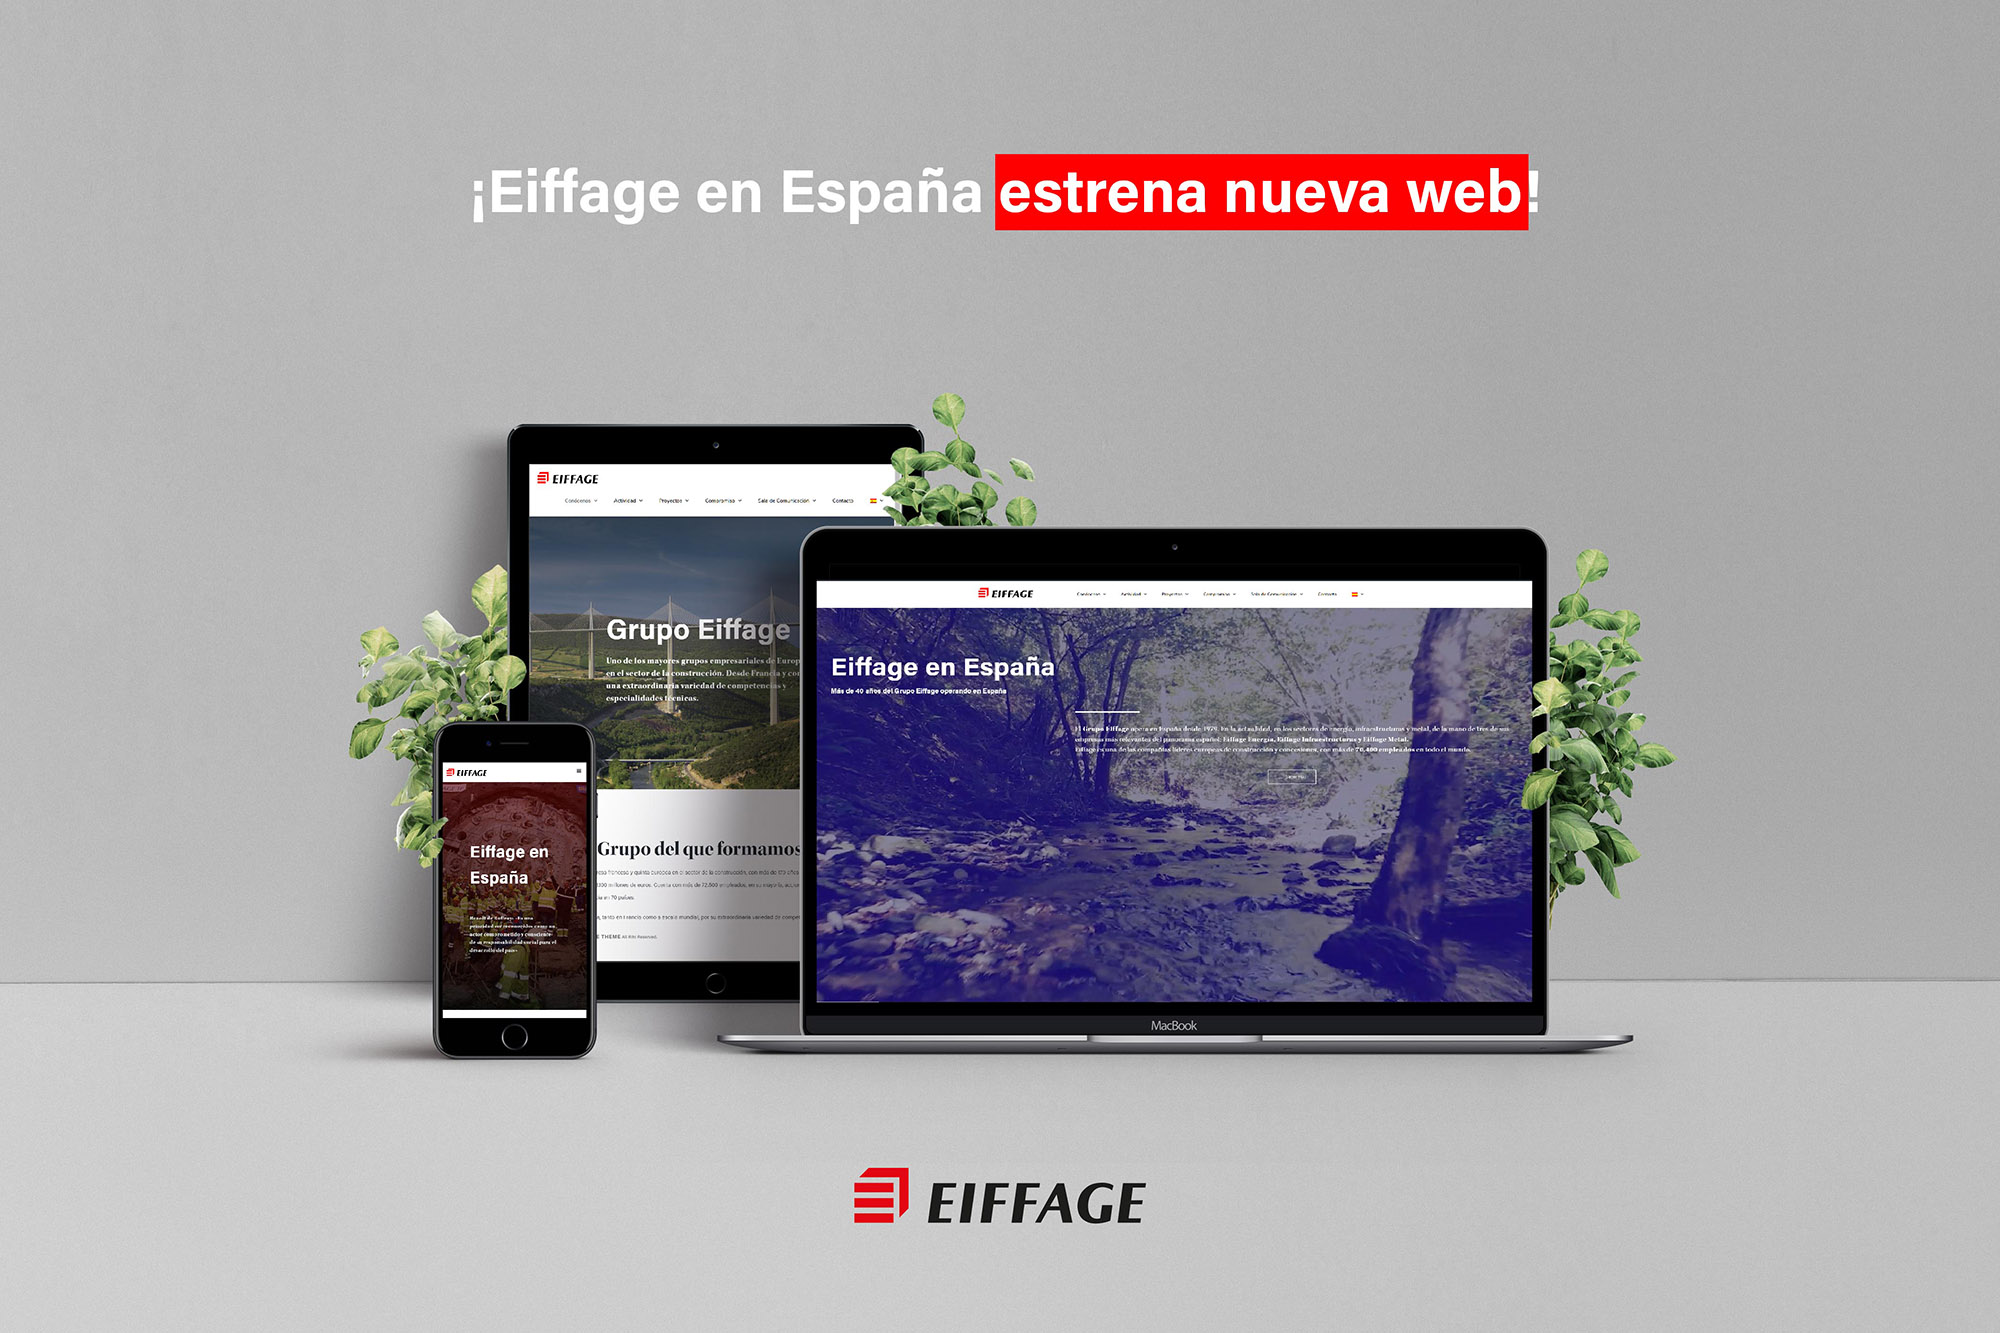 Eiffage España launches its new website